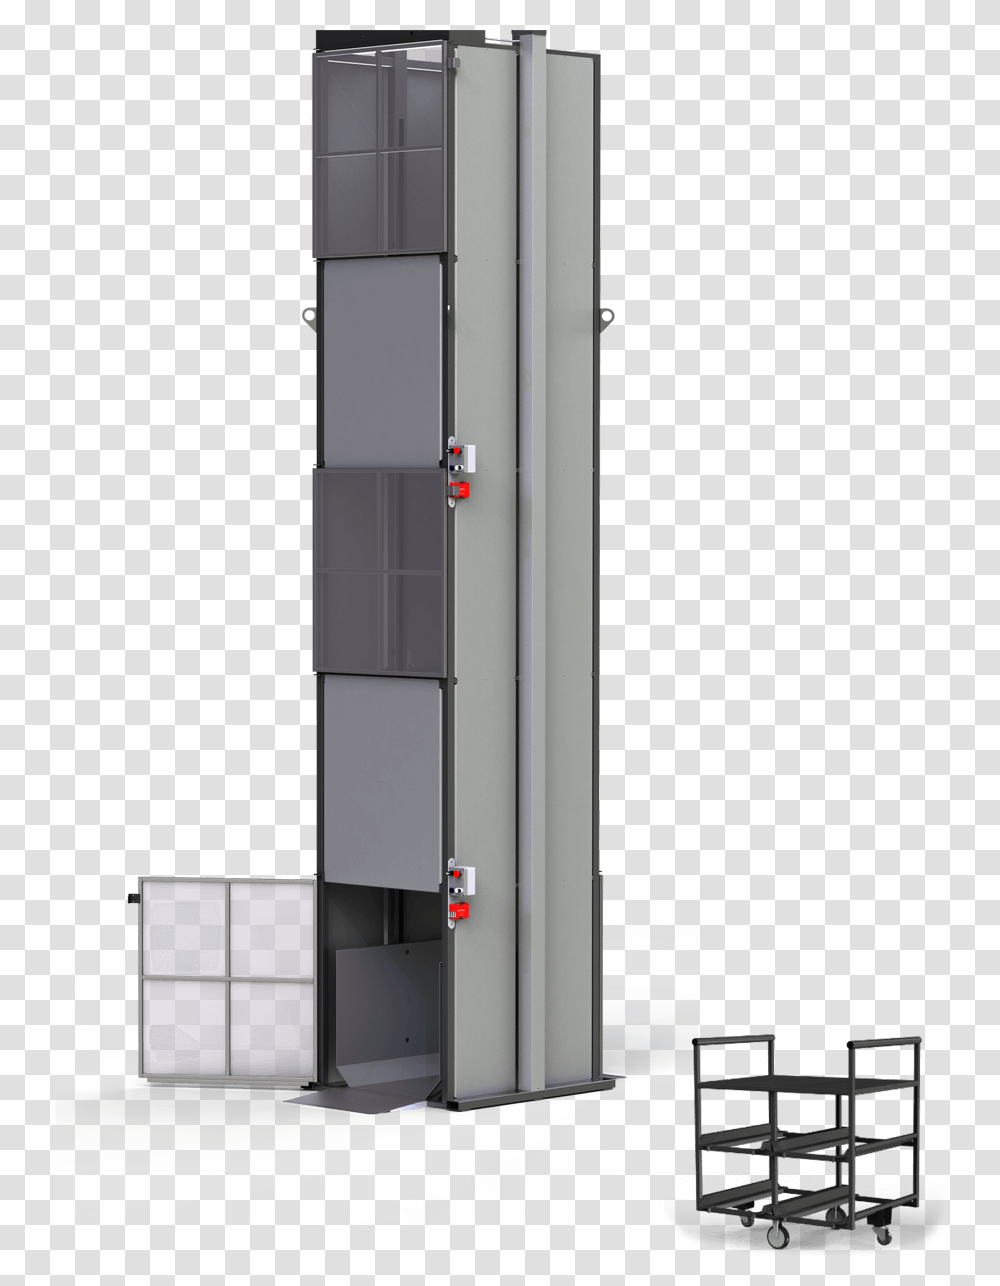 Chair, Door, Machine, Elevator, Appliance Transparent Png